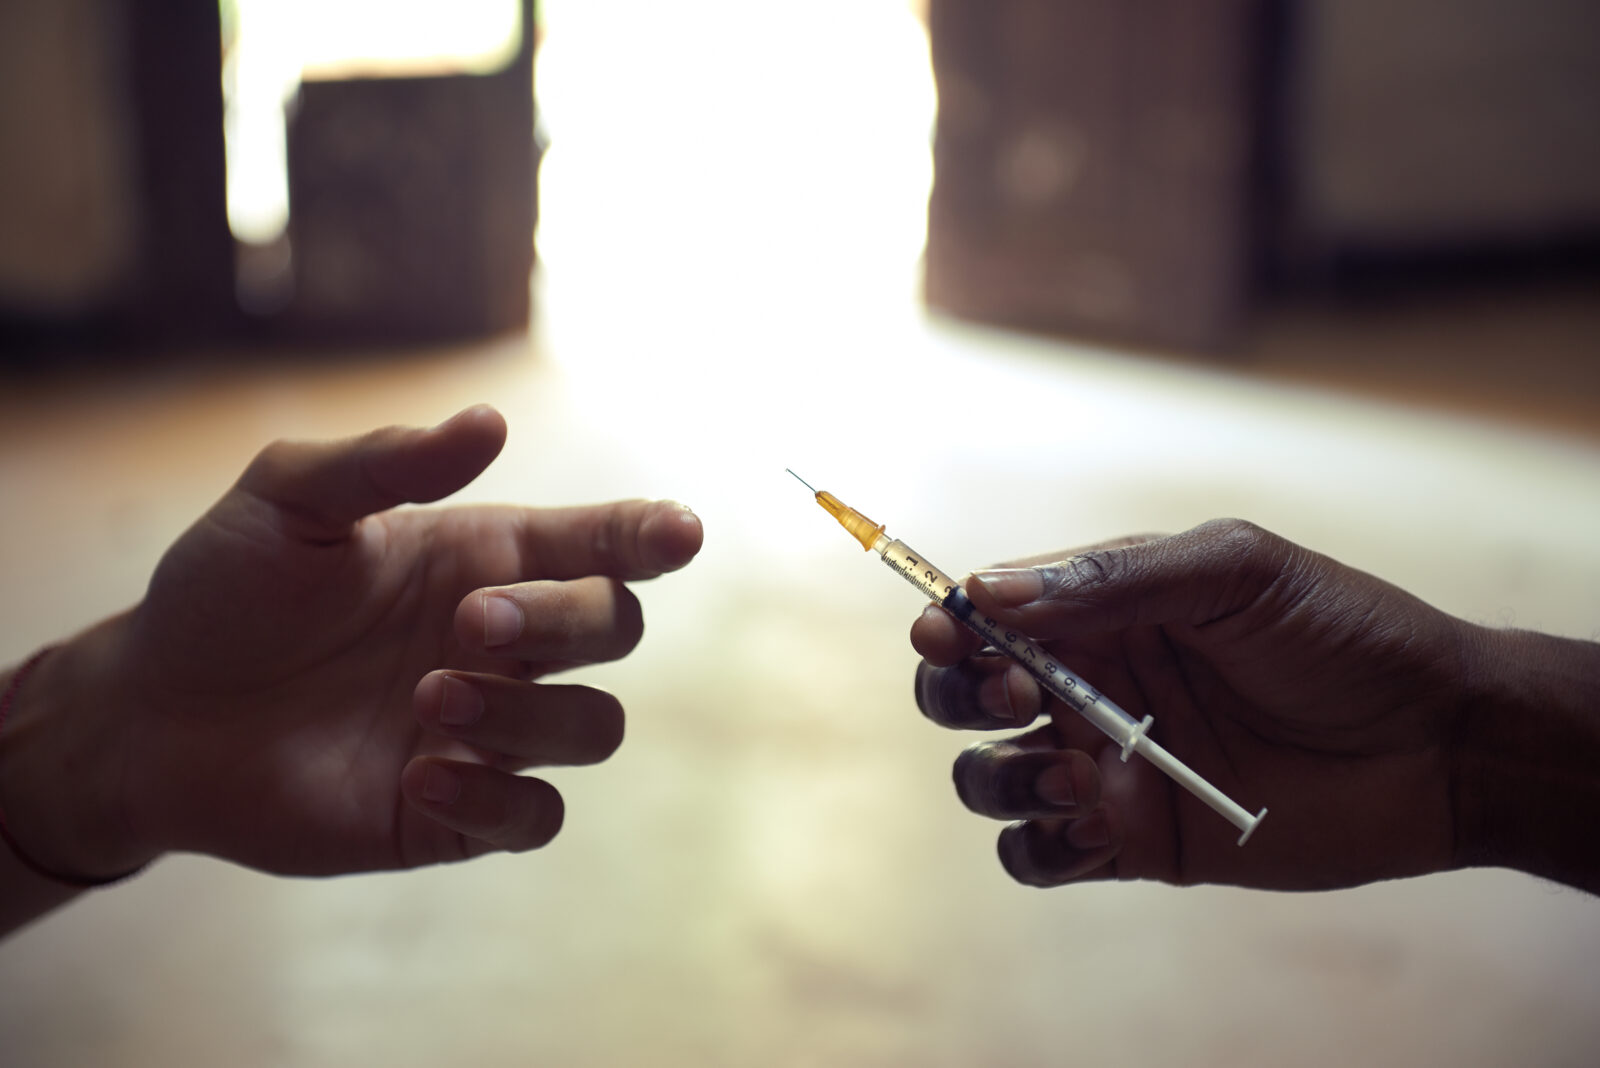 Drug abuse with people sharing the same syringe